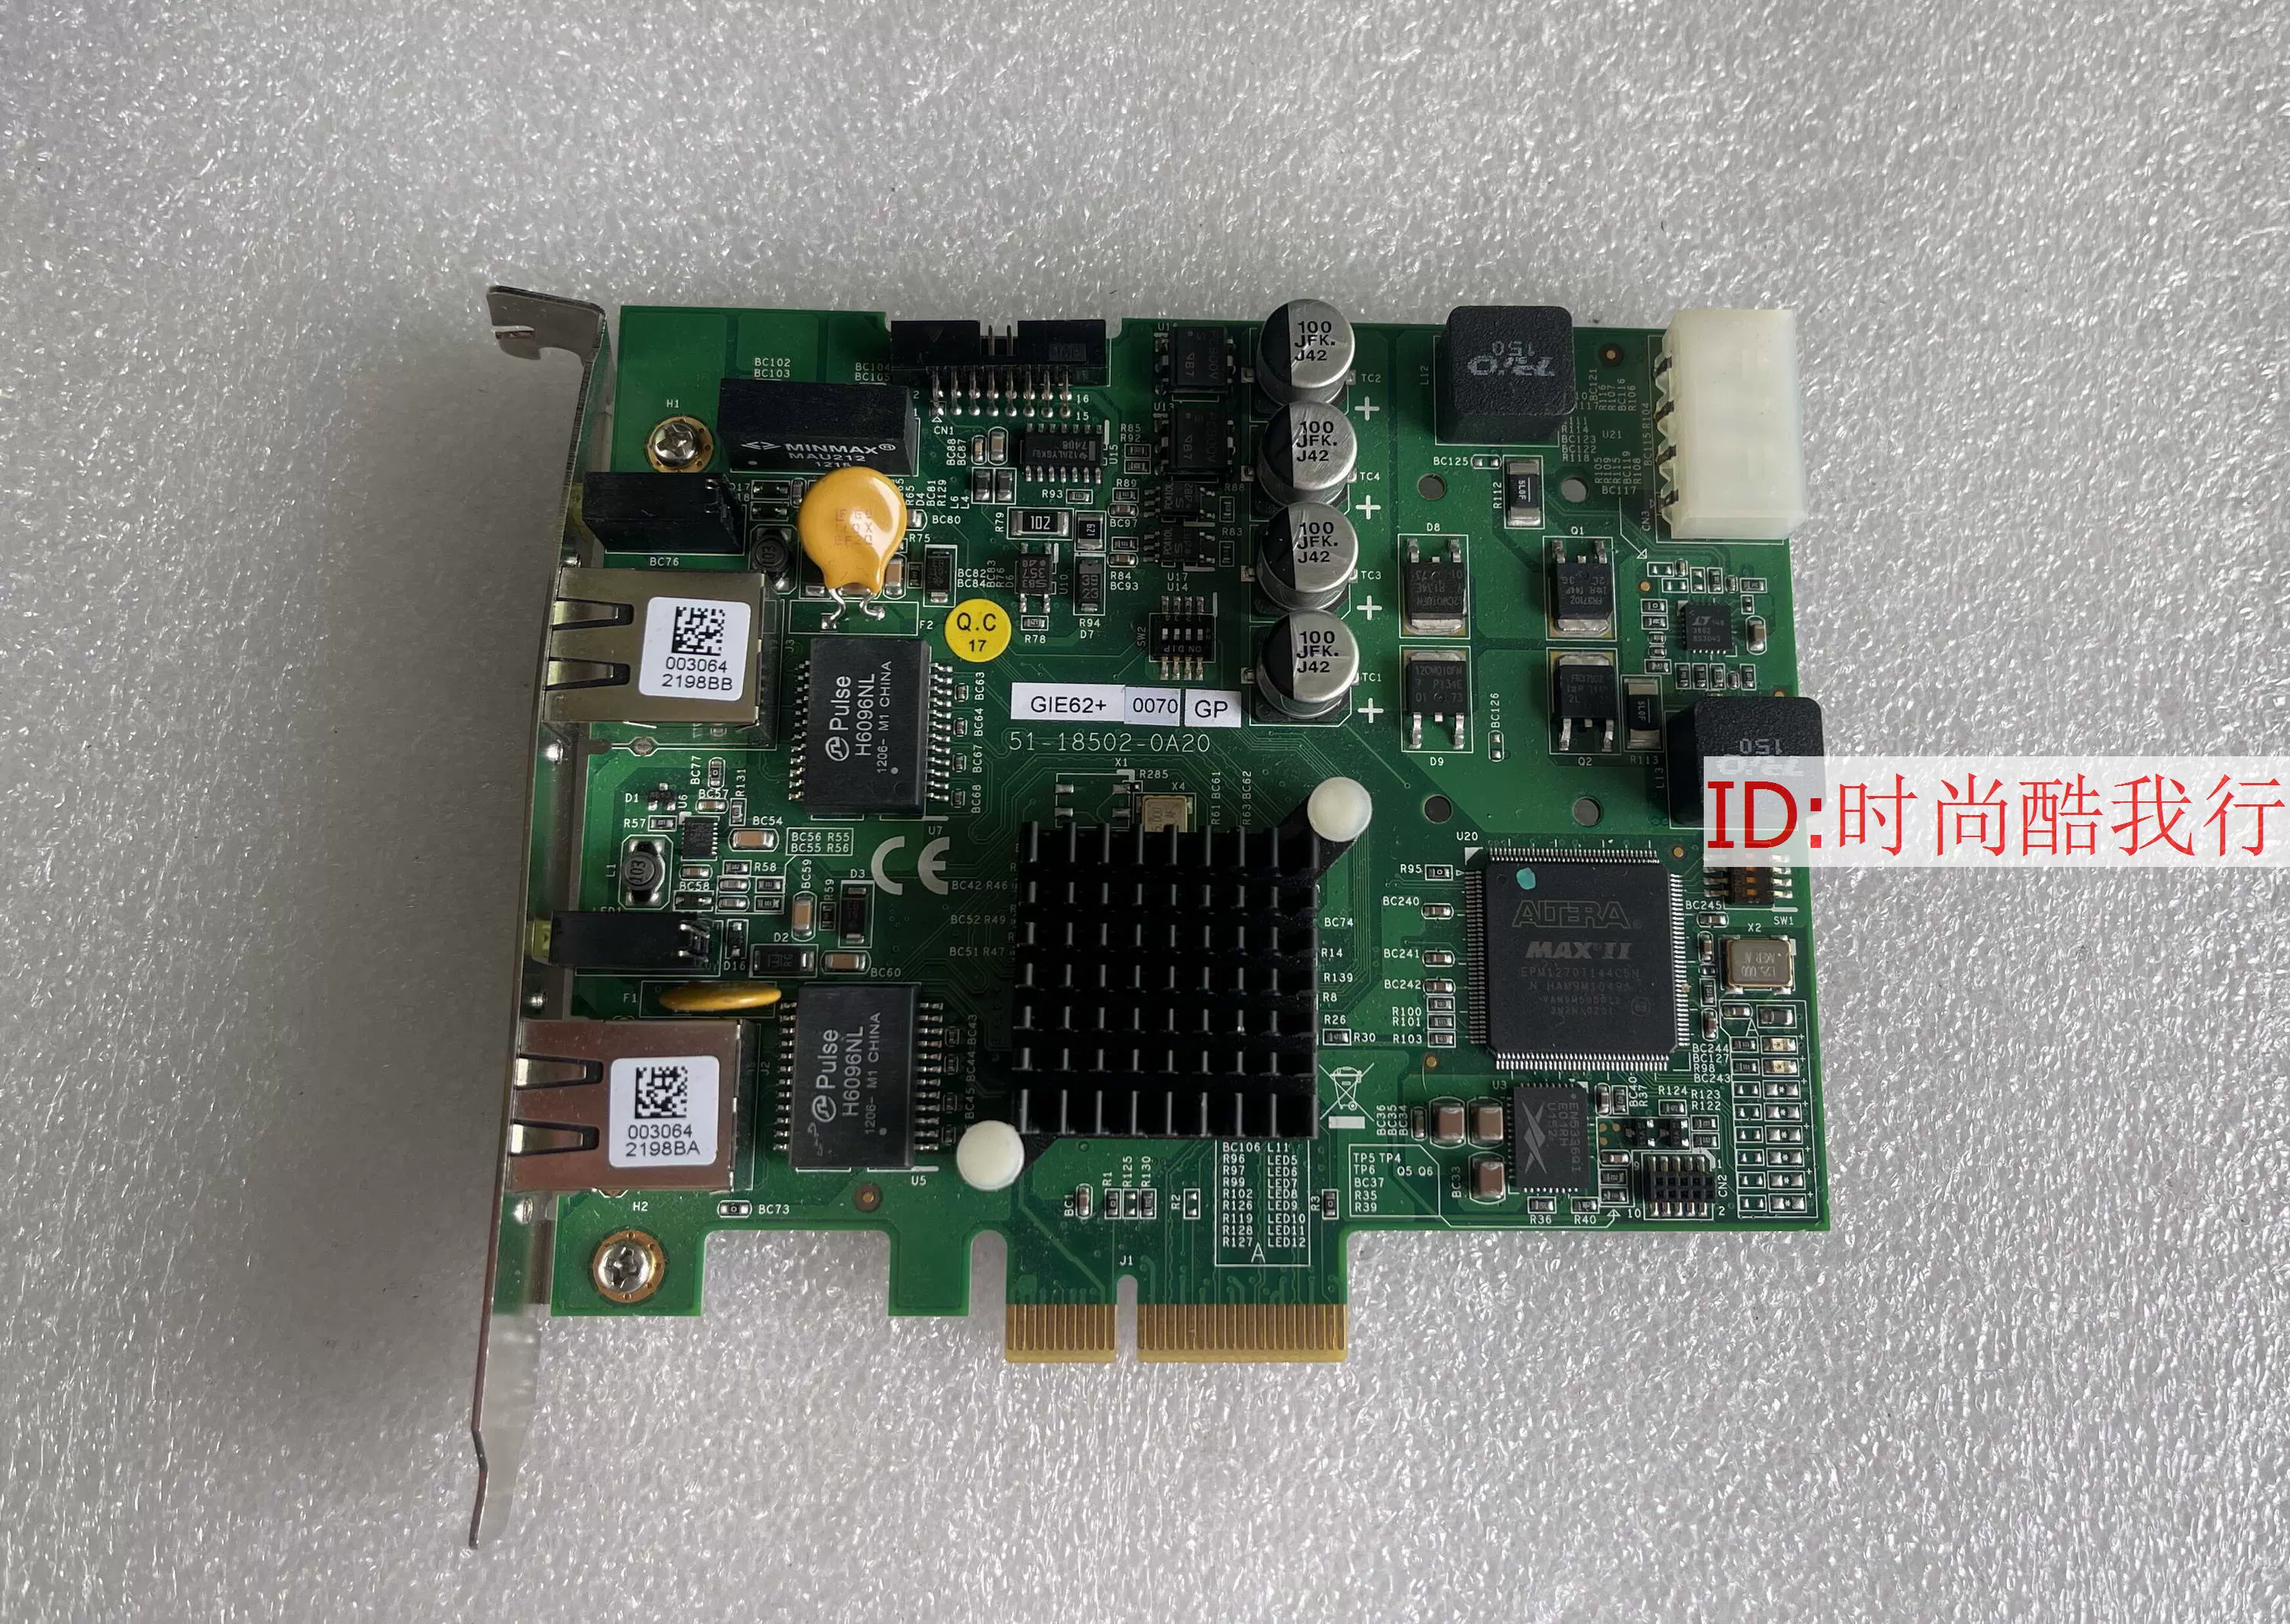 凌华ADLINK PCIe-GIE62+ 51-18502-0A20 图像采集卡-Taobao Singapore